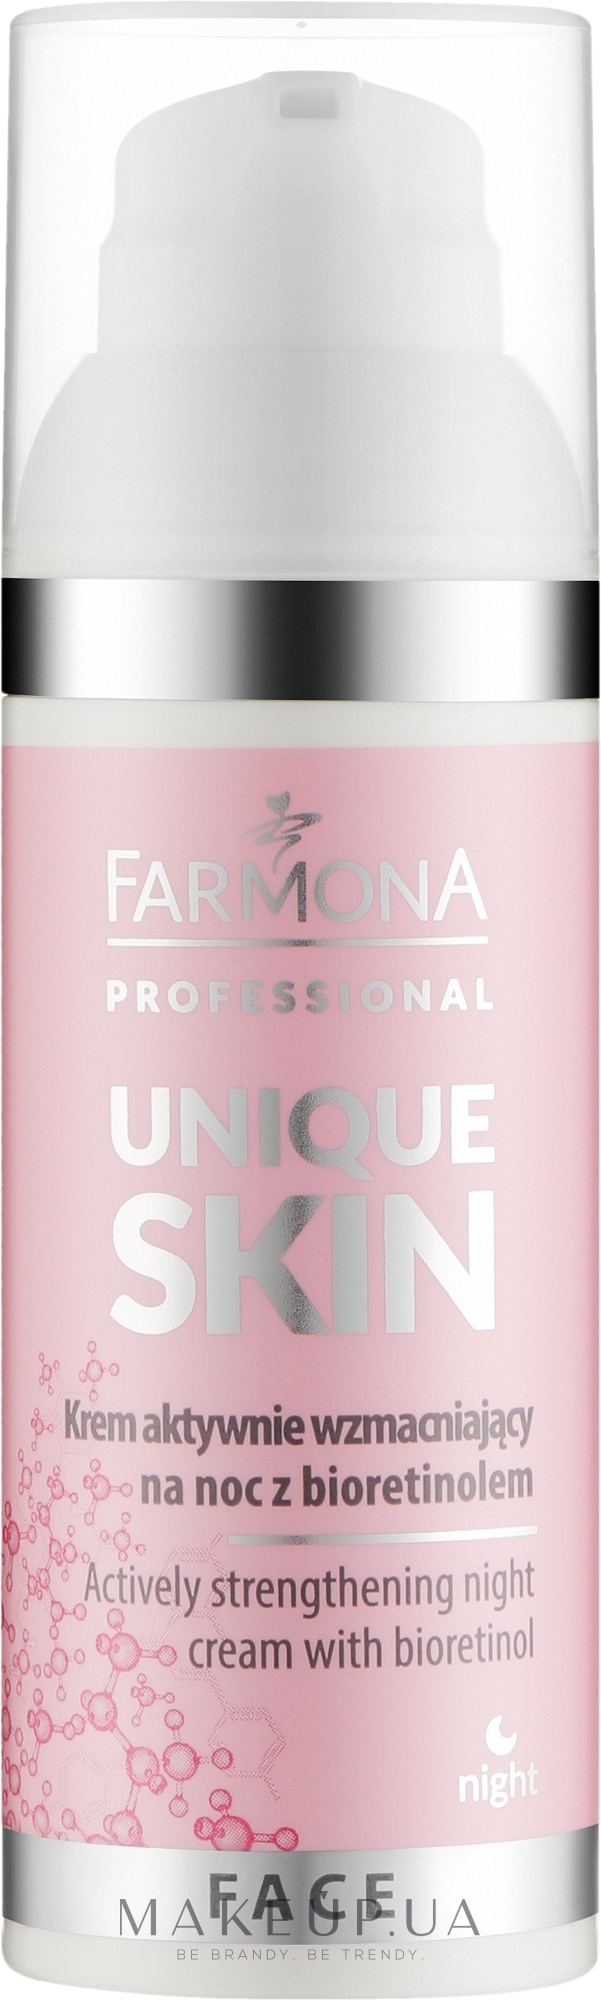 Активно укрепляющий ночной крем с биоретинолом - Farmona Professional Unique Skin Actively Strengthening Night Cream With Bioretinol — фото 50ml